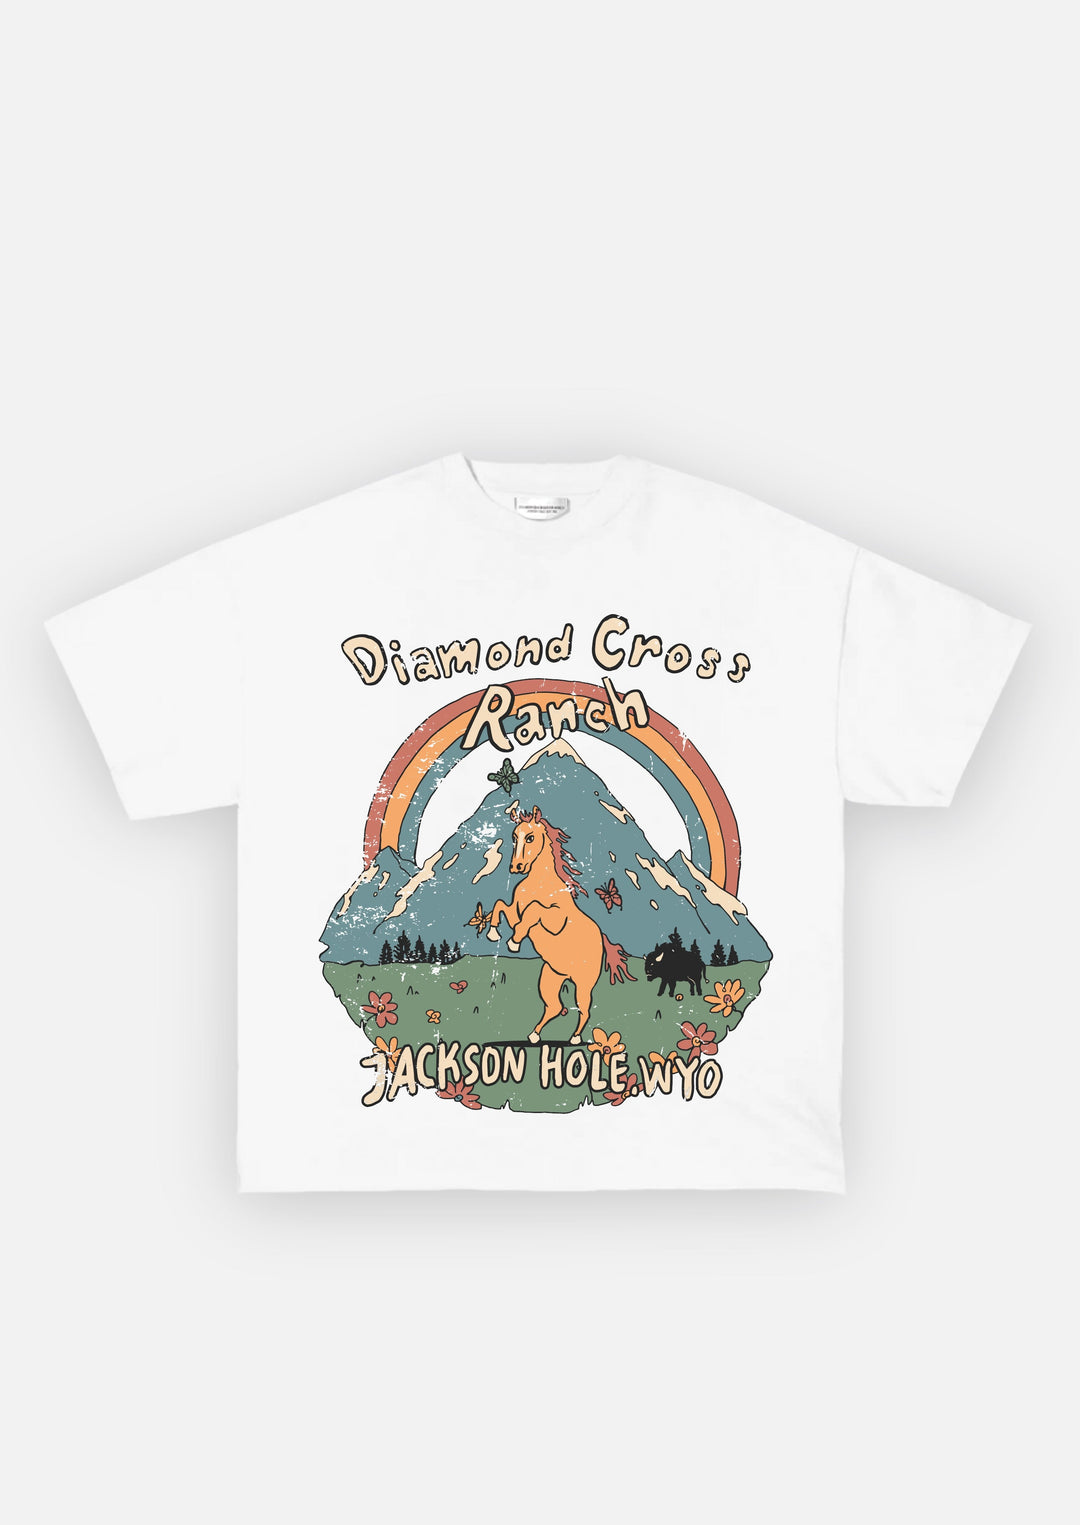 Diamond Cross Ranch Mountain Horse T-Shirt